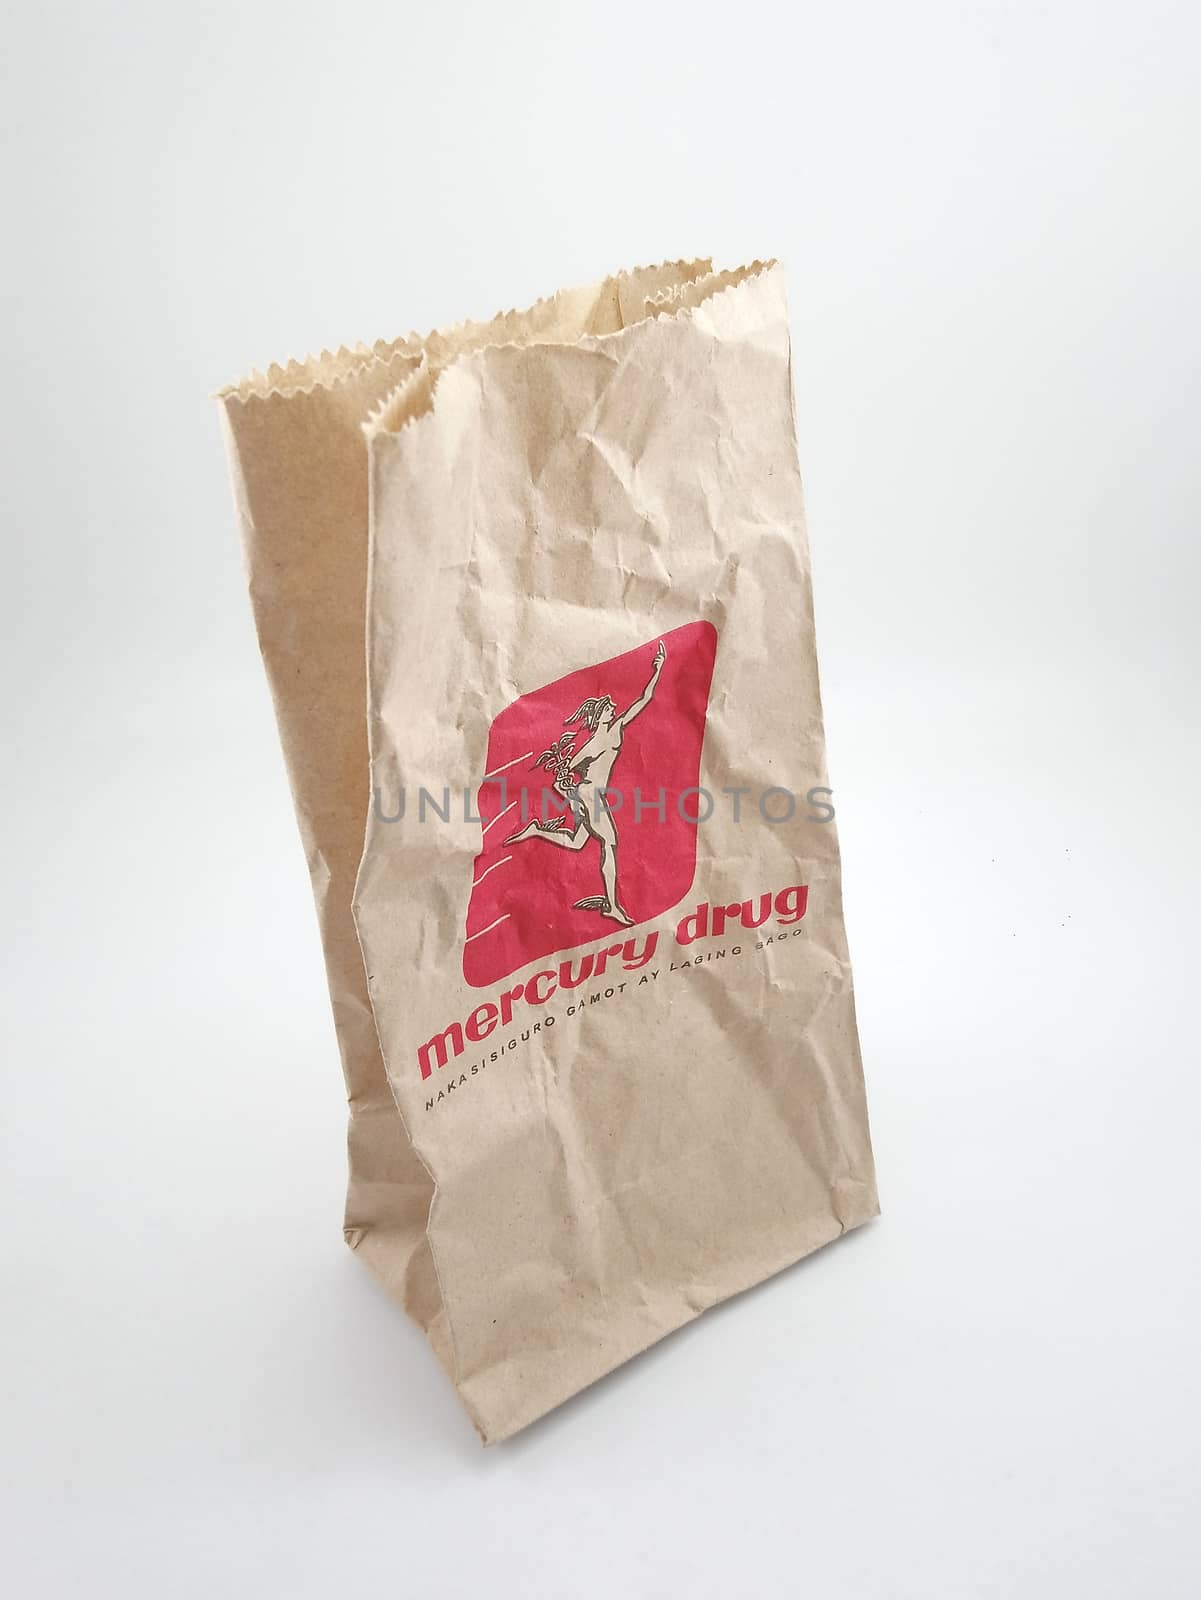 Mercury drug paper bag in Manila, Philippines by imwaltersy